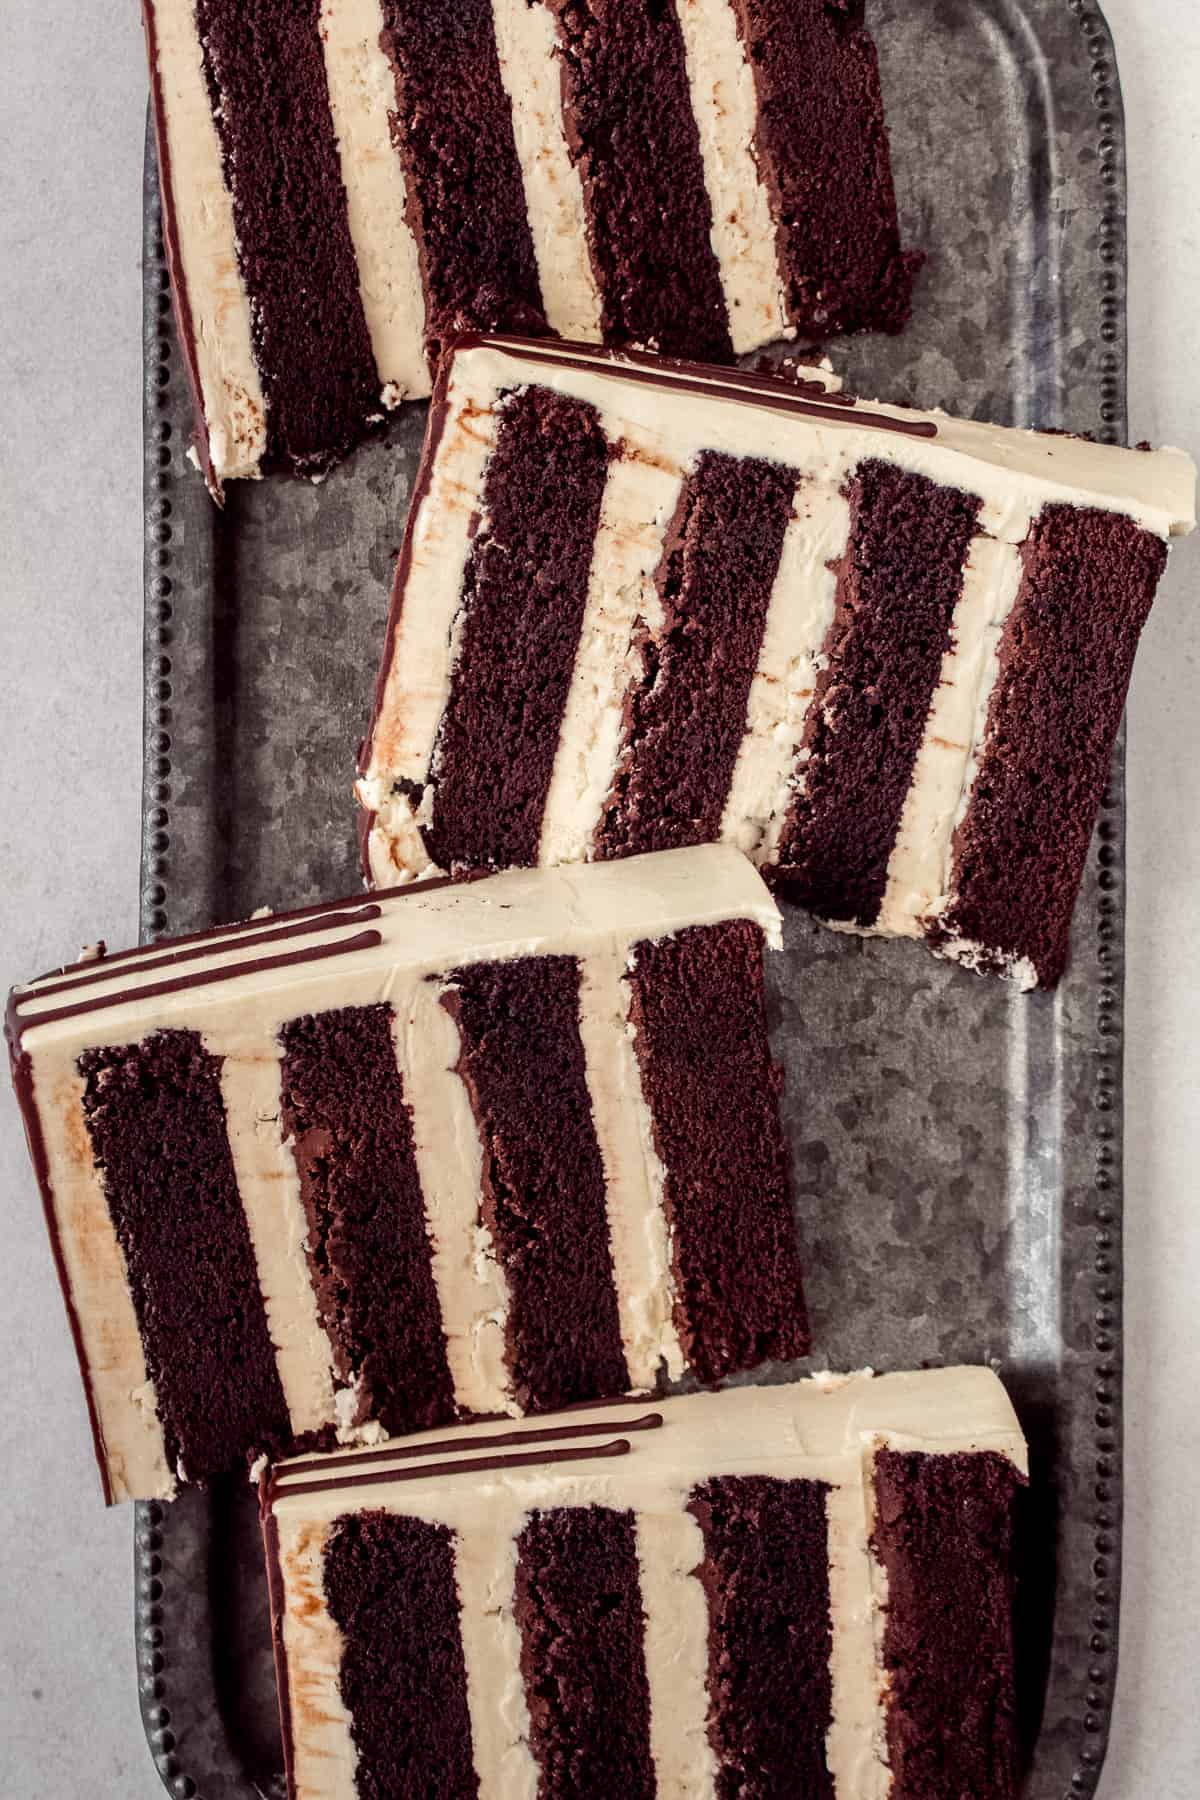 Chocolate Stout Layer Cake